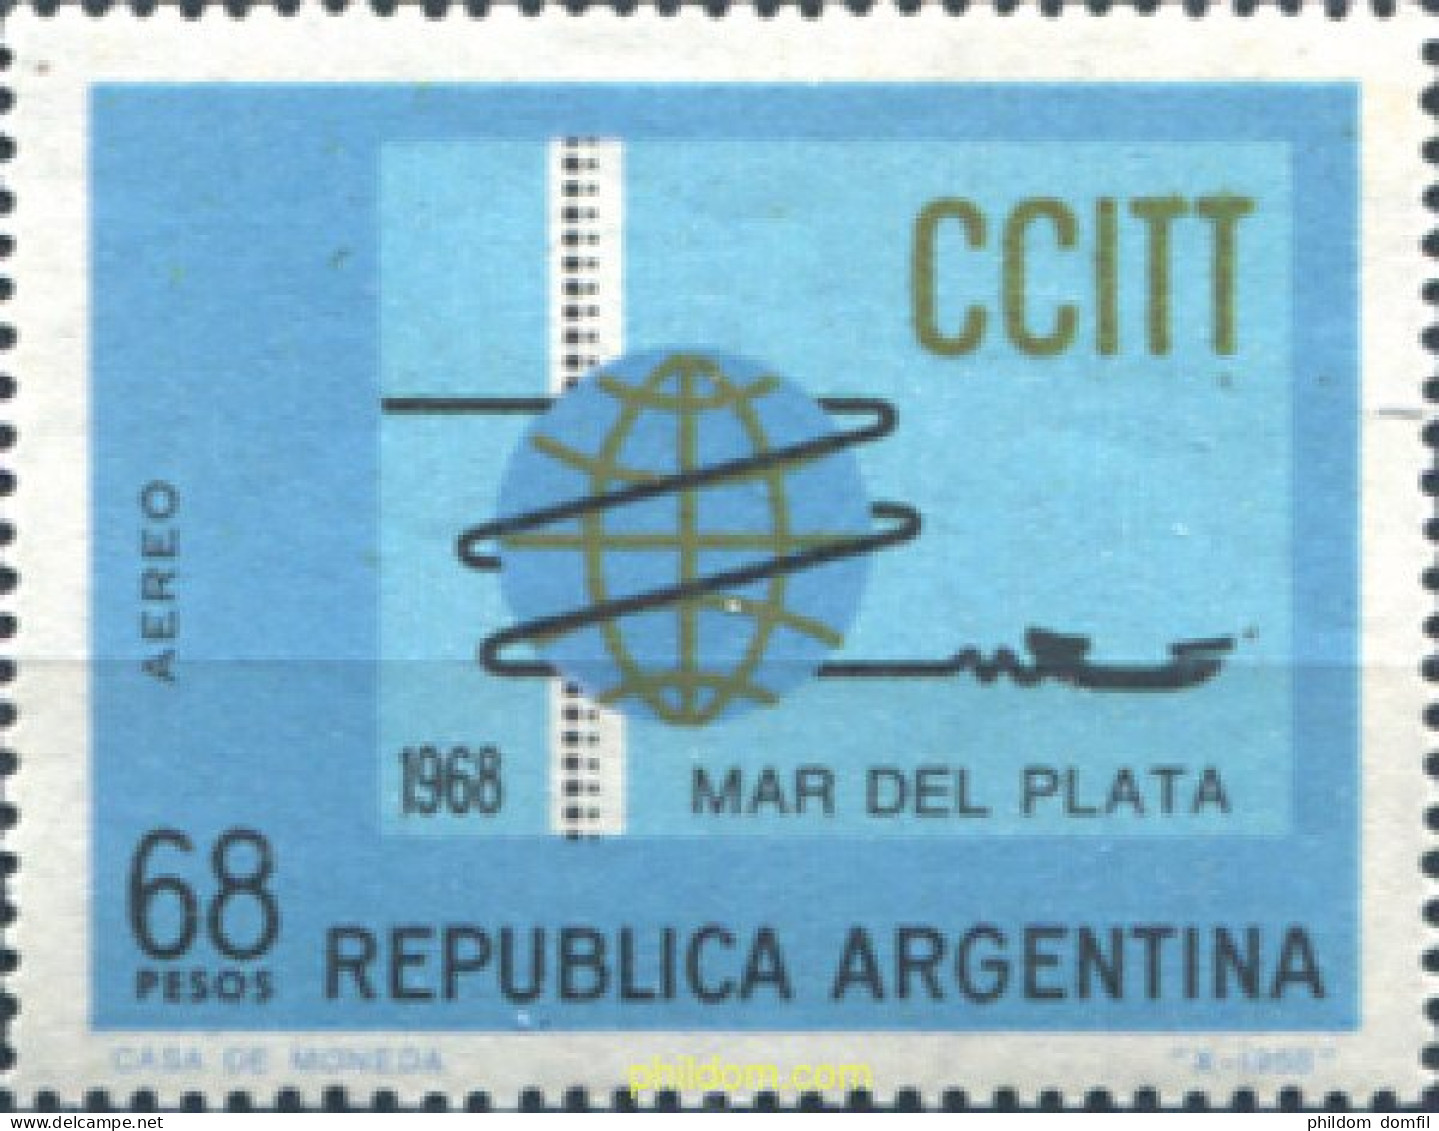 283803 MNH ARGENTINA 1968 4 ASANBLE DE LA COMISION CONSULTIVA INTERNACIONAL DE TELEGRAFOS - Ungebraucht